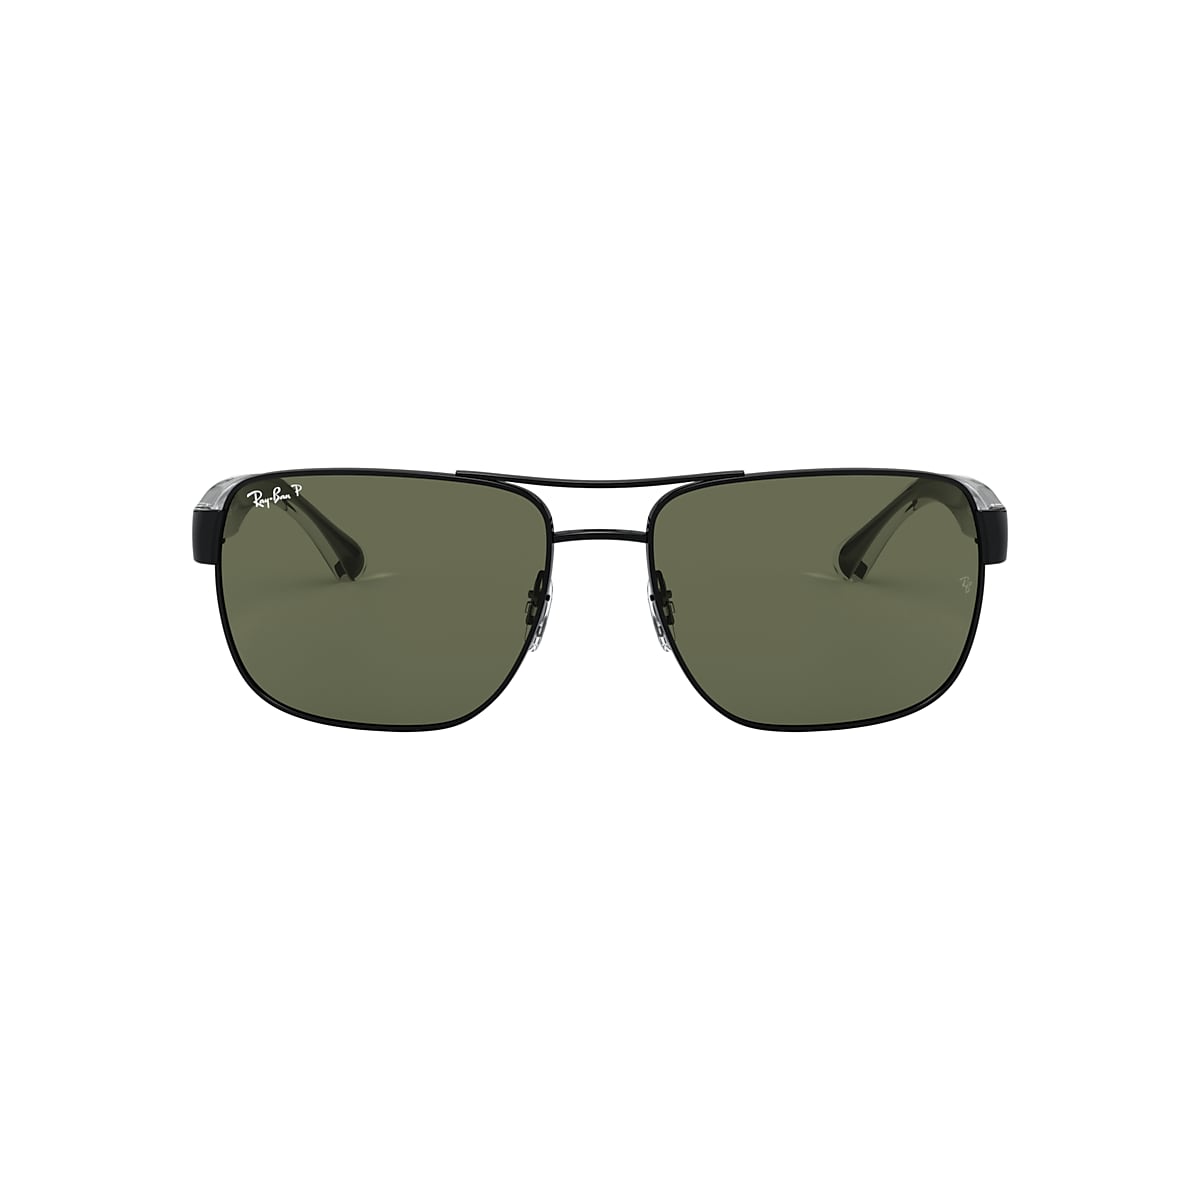 RAY-BAN RB3530 Black - Men Sunglasses, Green Lens